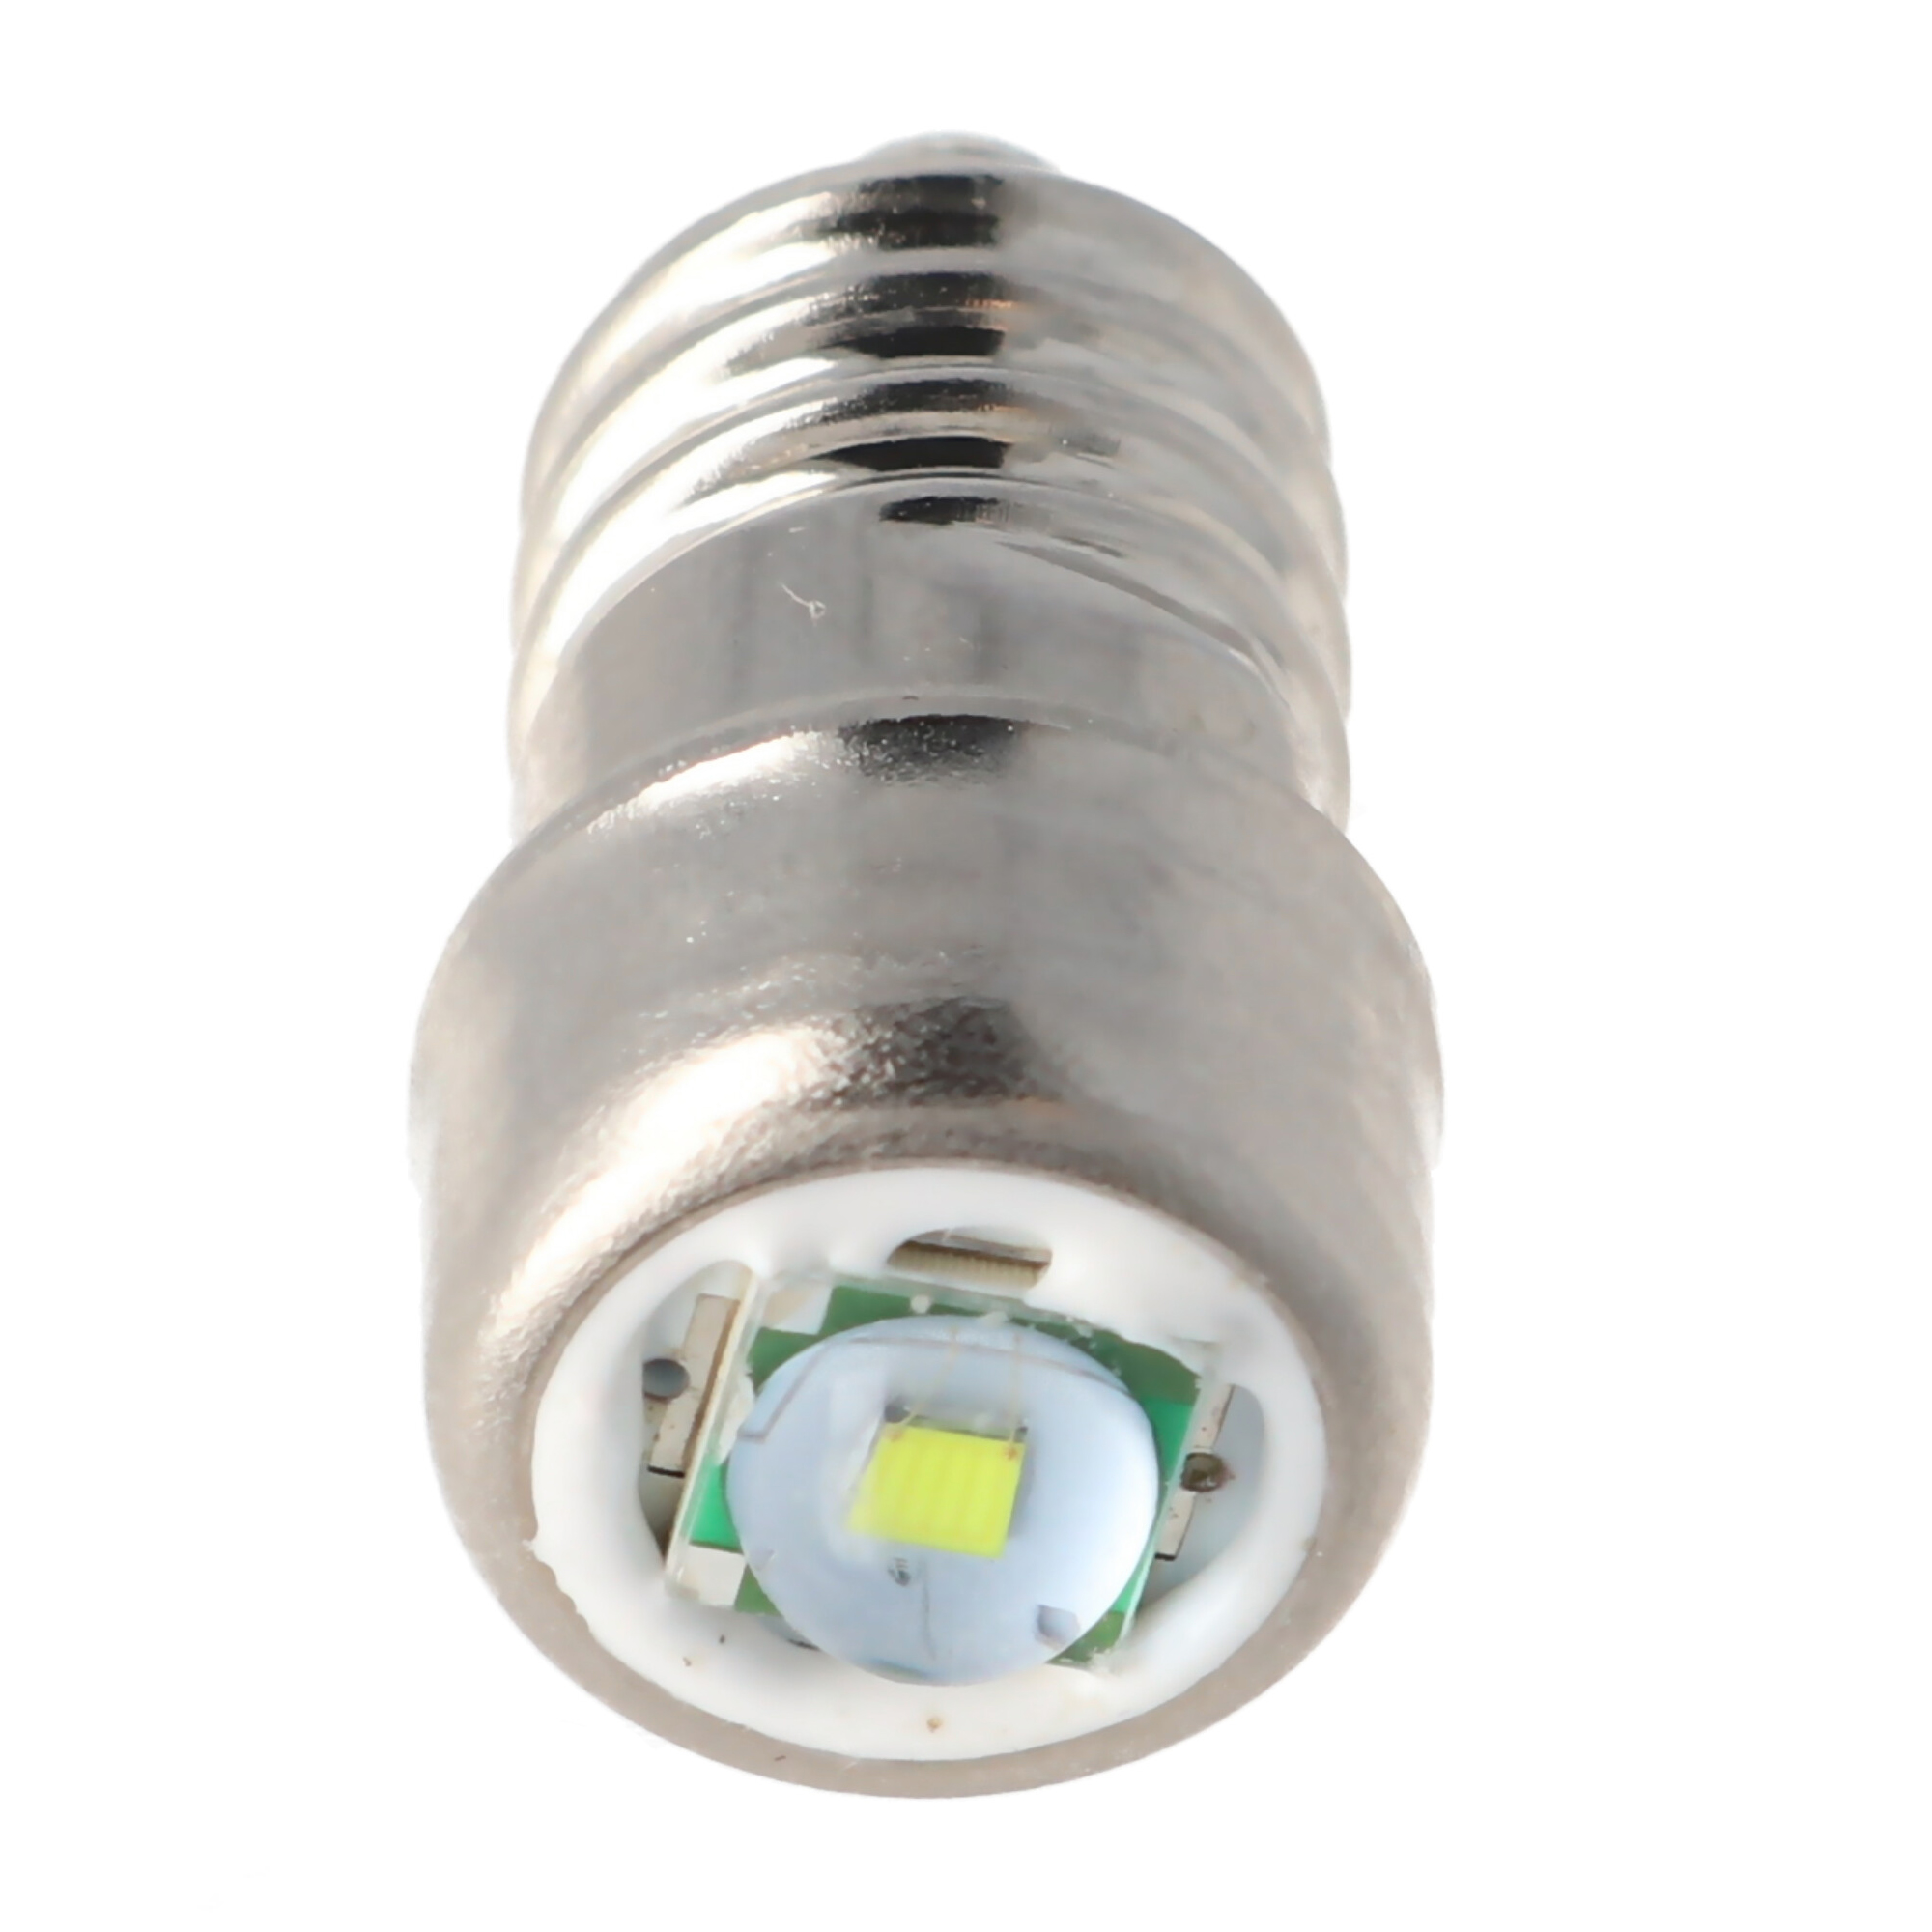 LED  3,5-4,5Volt Birnchen für E10 Fassungen    2 Stück  NEU 